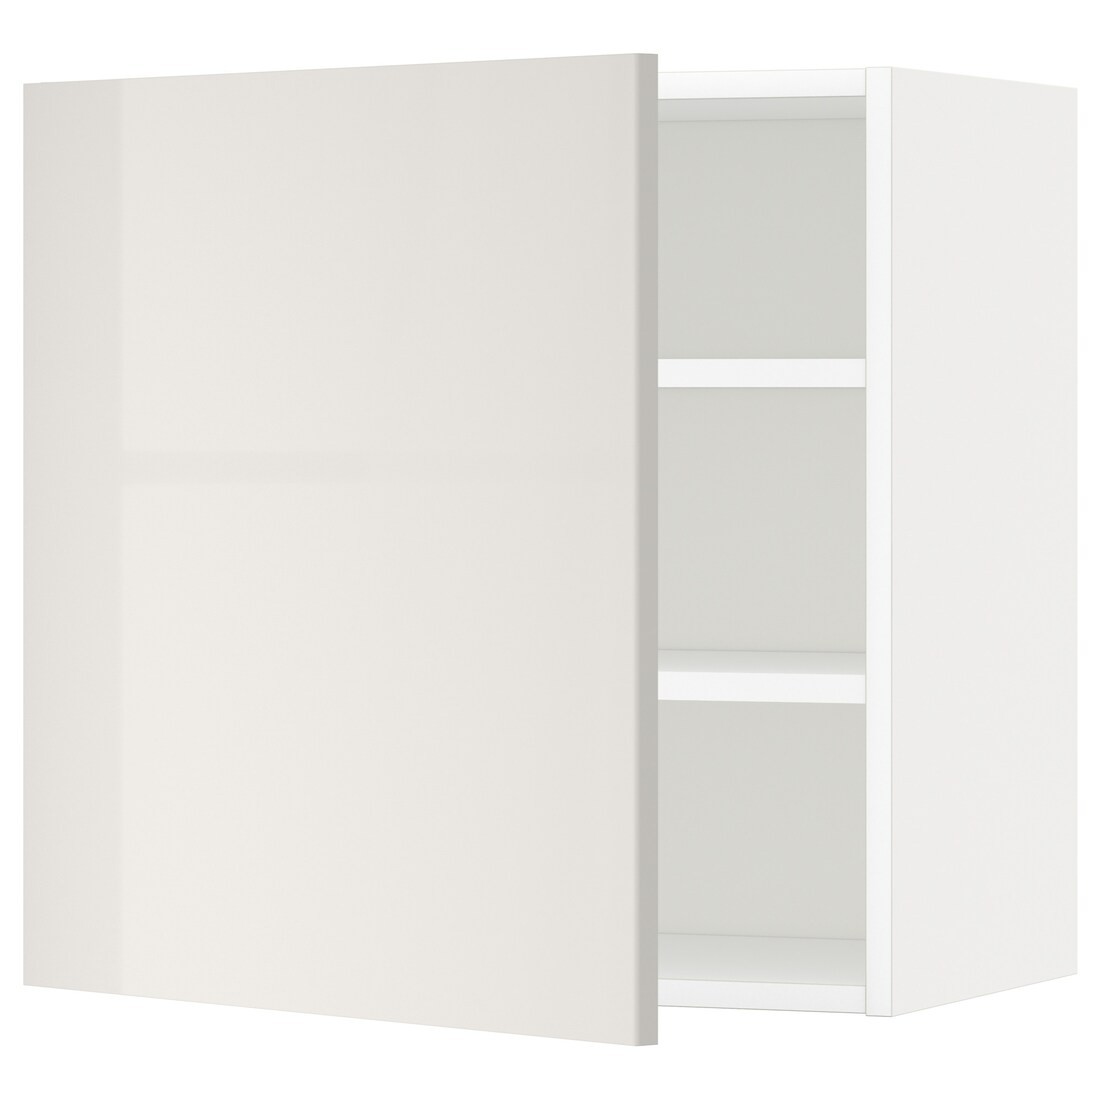 IKEA METOD МЕТОД Шкаф навесной с полками, белый / Ringhult светло-серый, 60x60 см 29461920 | 294.619.20